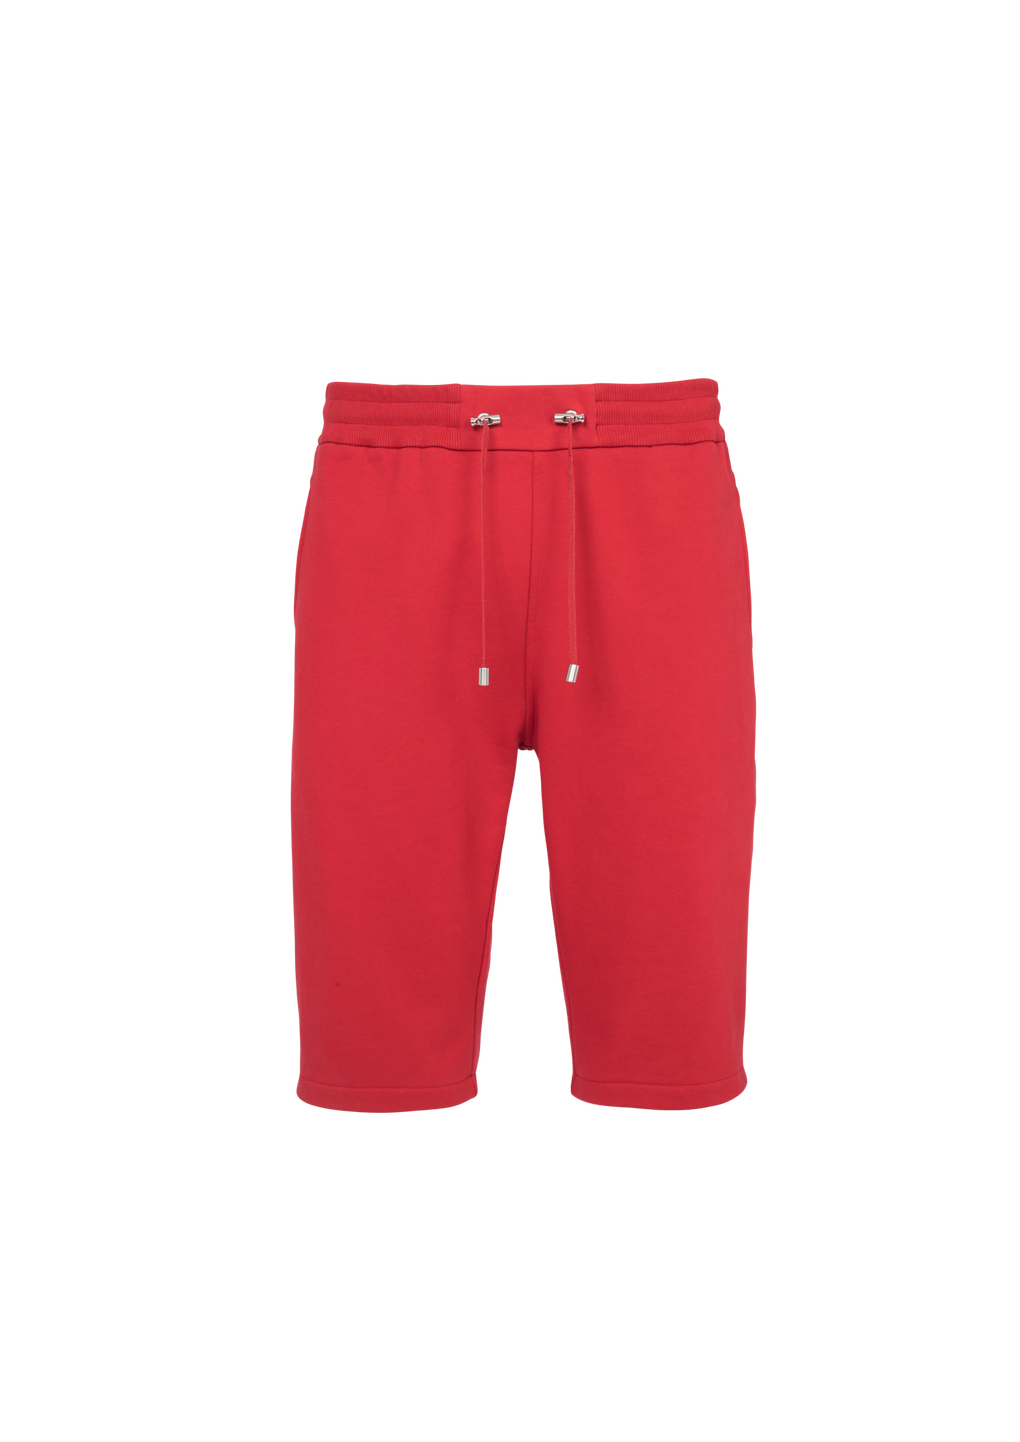 Cotton shorts with flocked Balmain Paris logo, red, hi-res